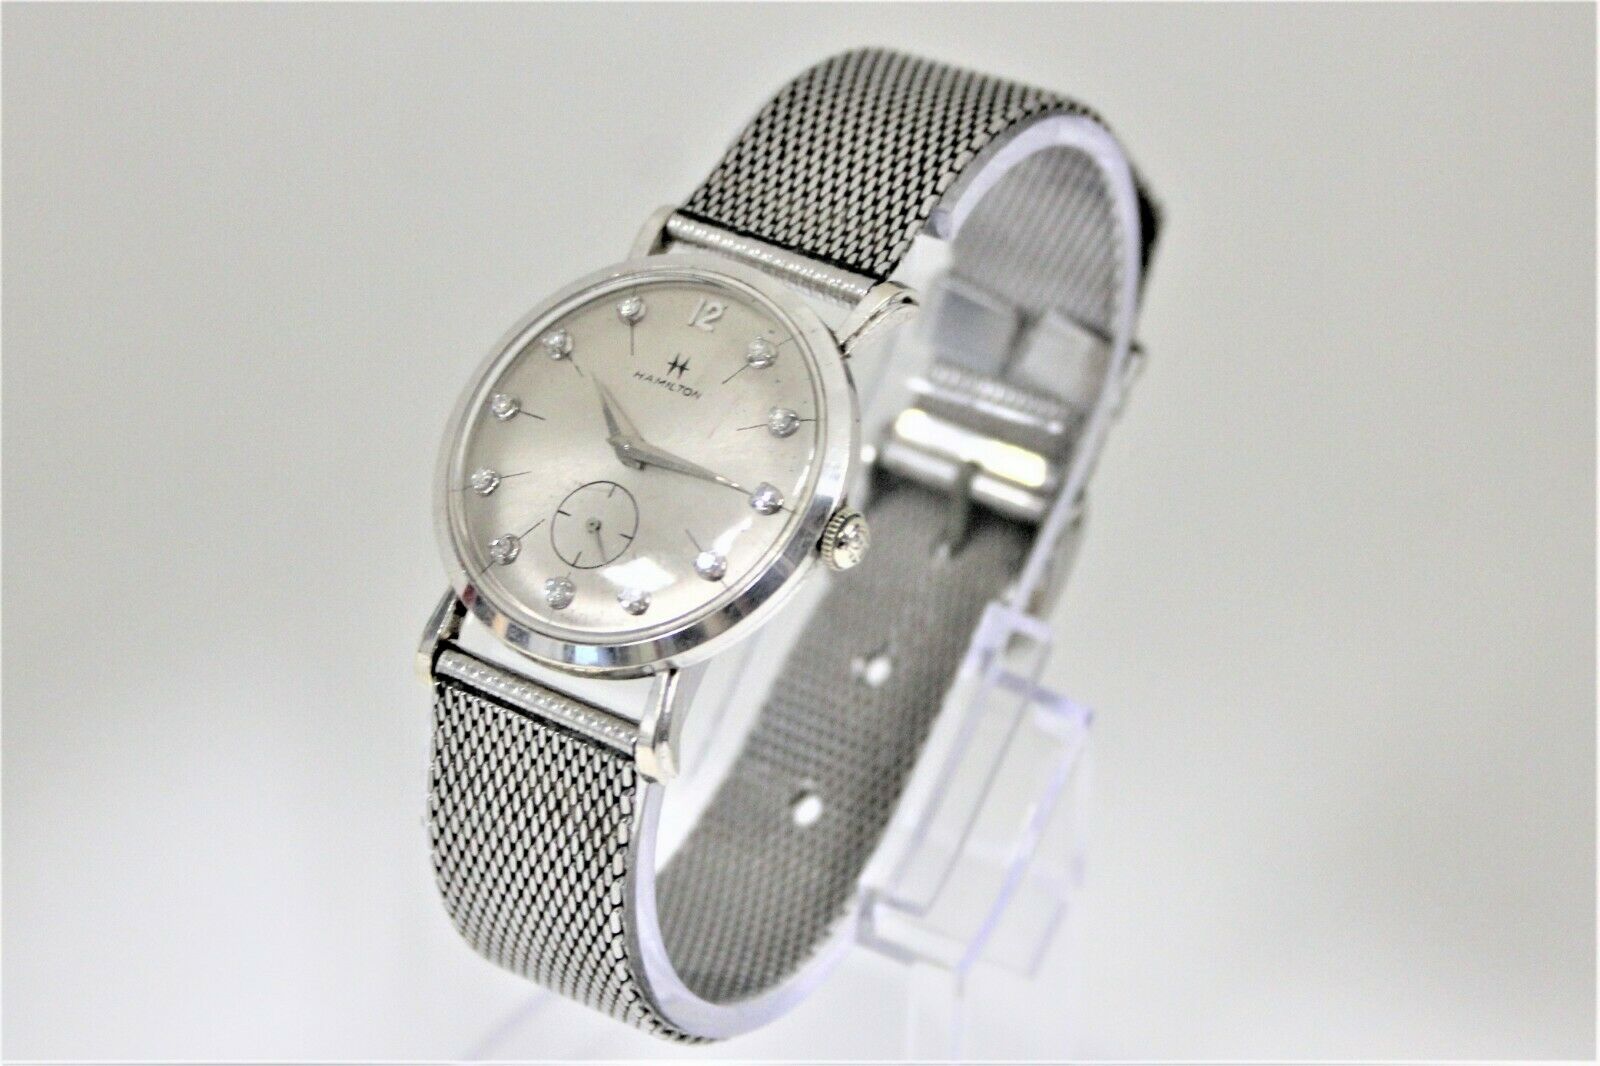 1950s Universal 14K White Gold & Diamond Watch - The Verma Group